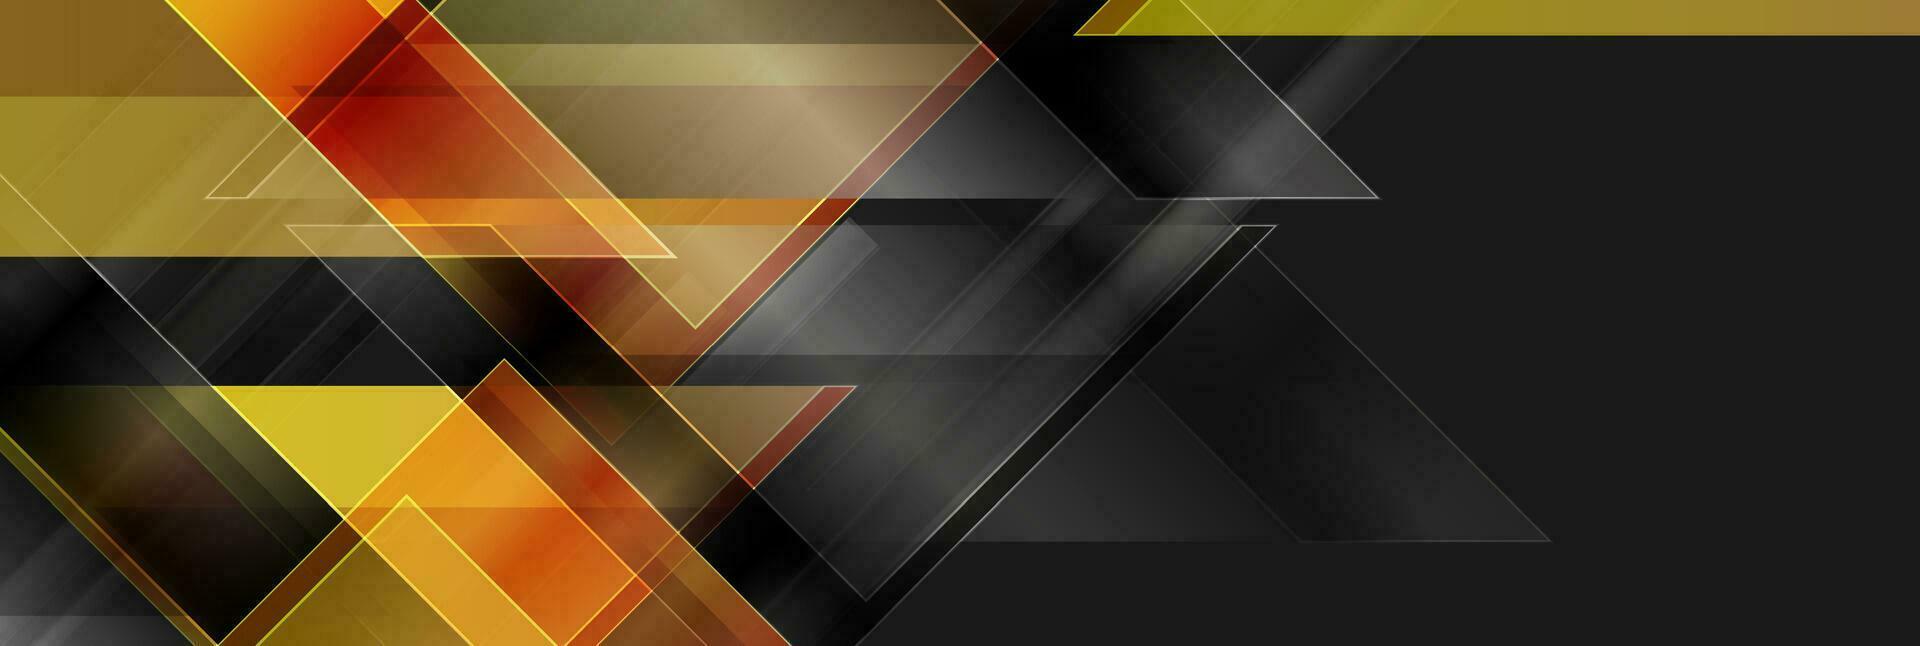 zwart en gouden glanzend driehoeken abstract technologie achtergrond vector